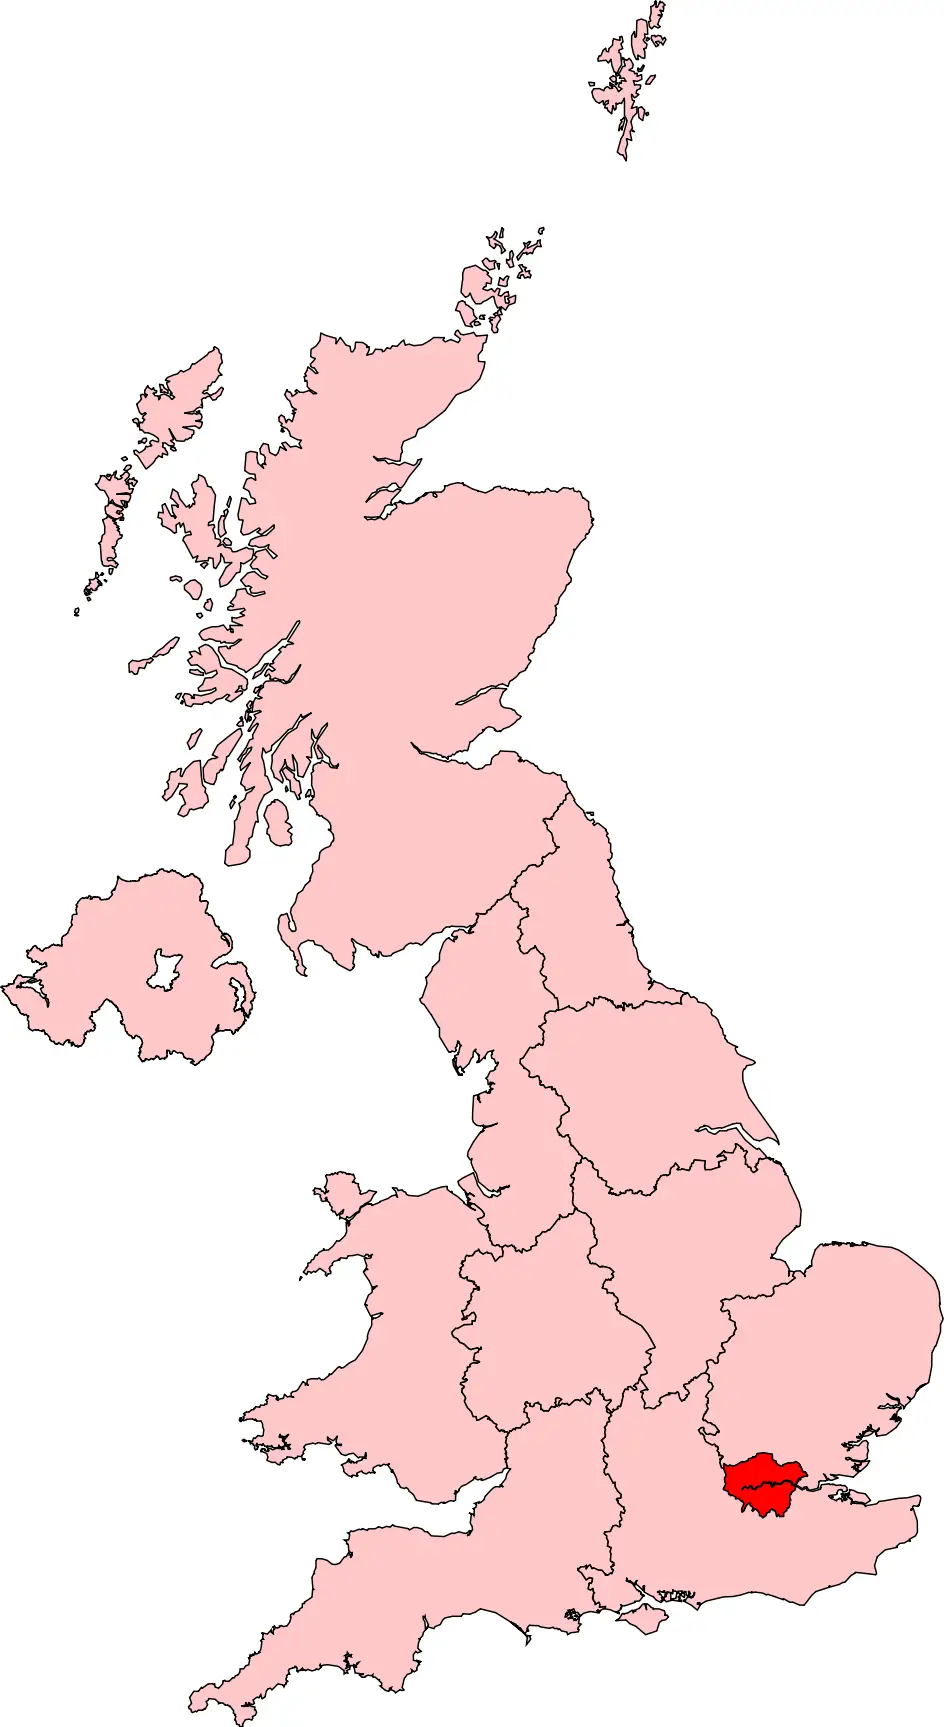 london-region-uk-mapsof